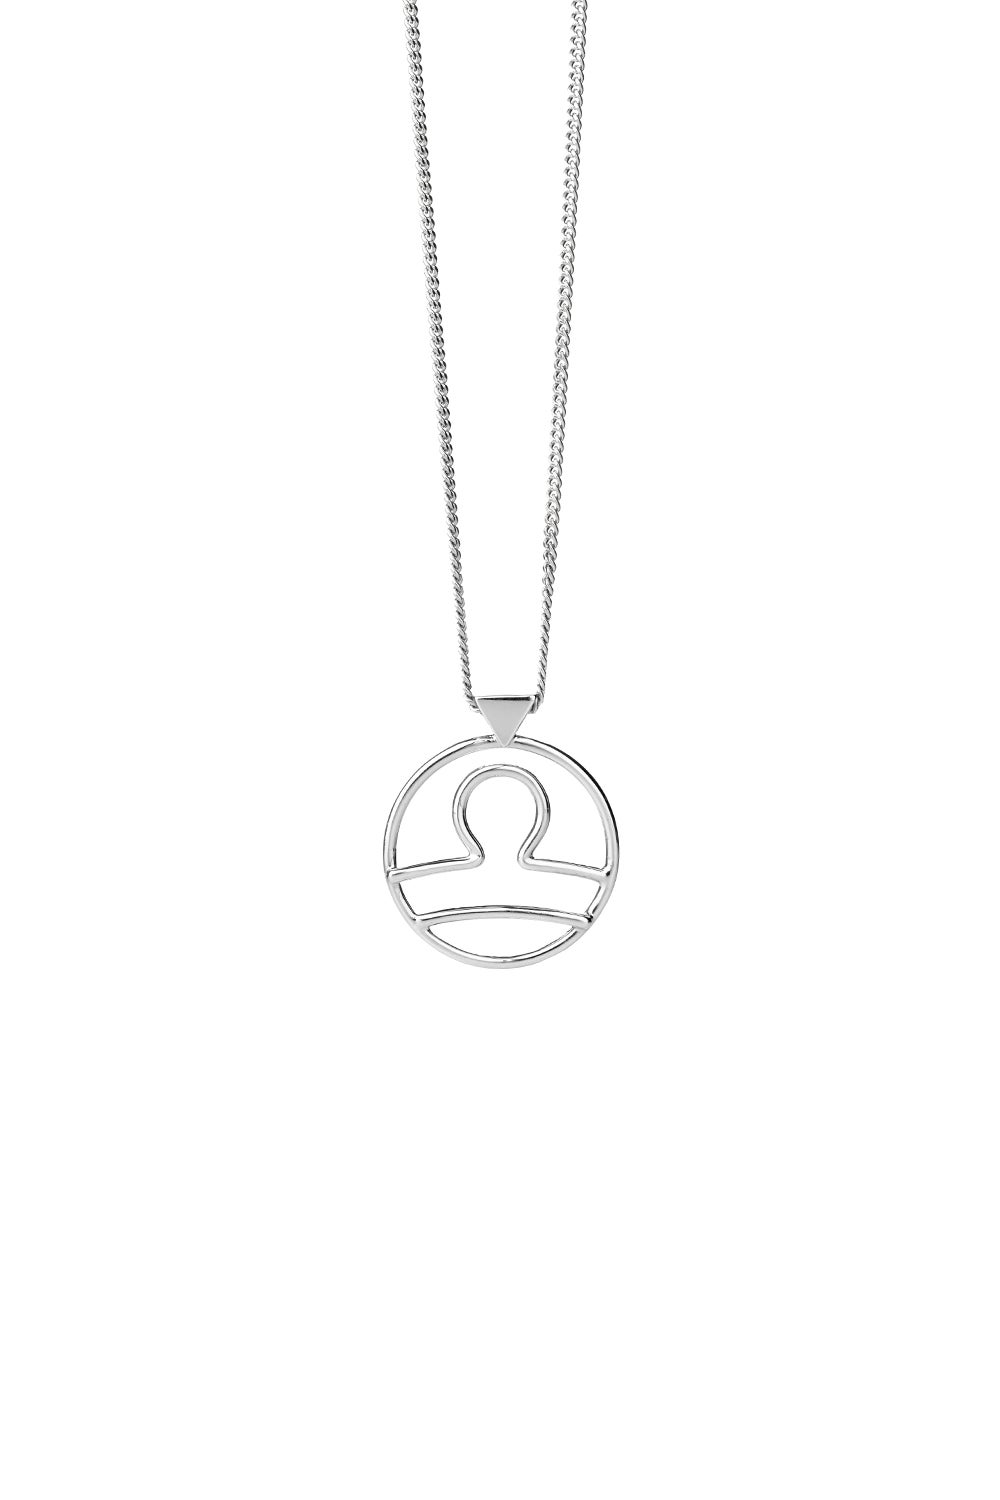 Claire's Silver-Tone Crystal Zodiac Symbol Pendant Necklace - Libra | £3.20  | Buchanan Galleries